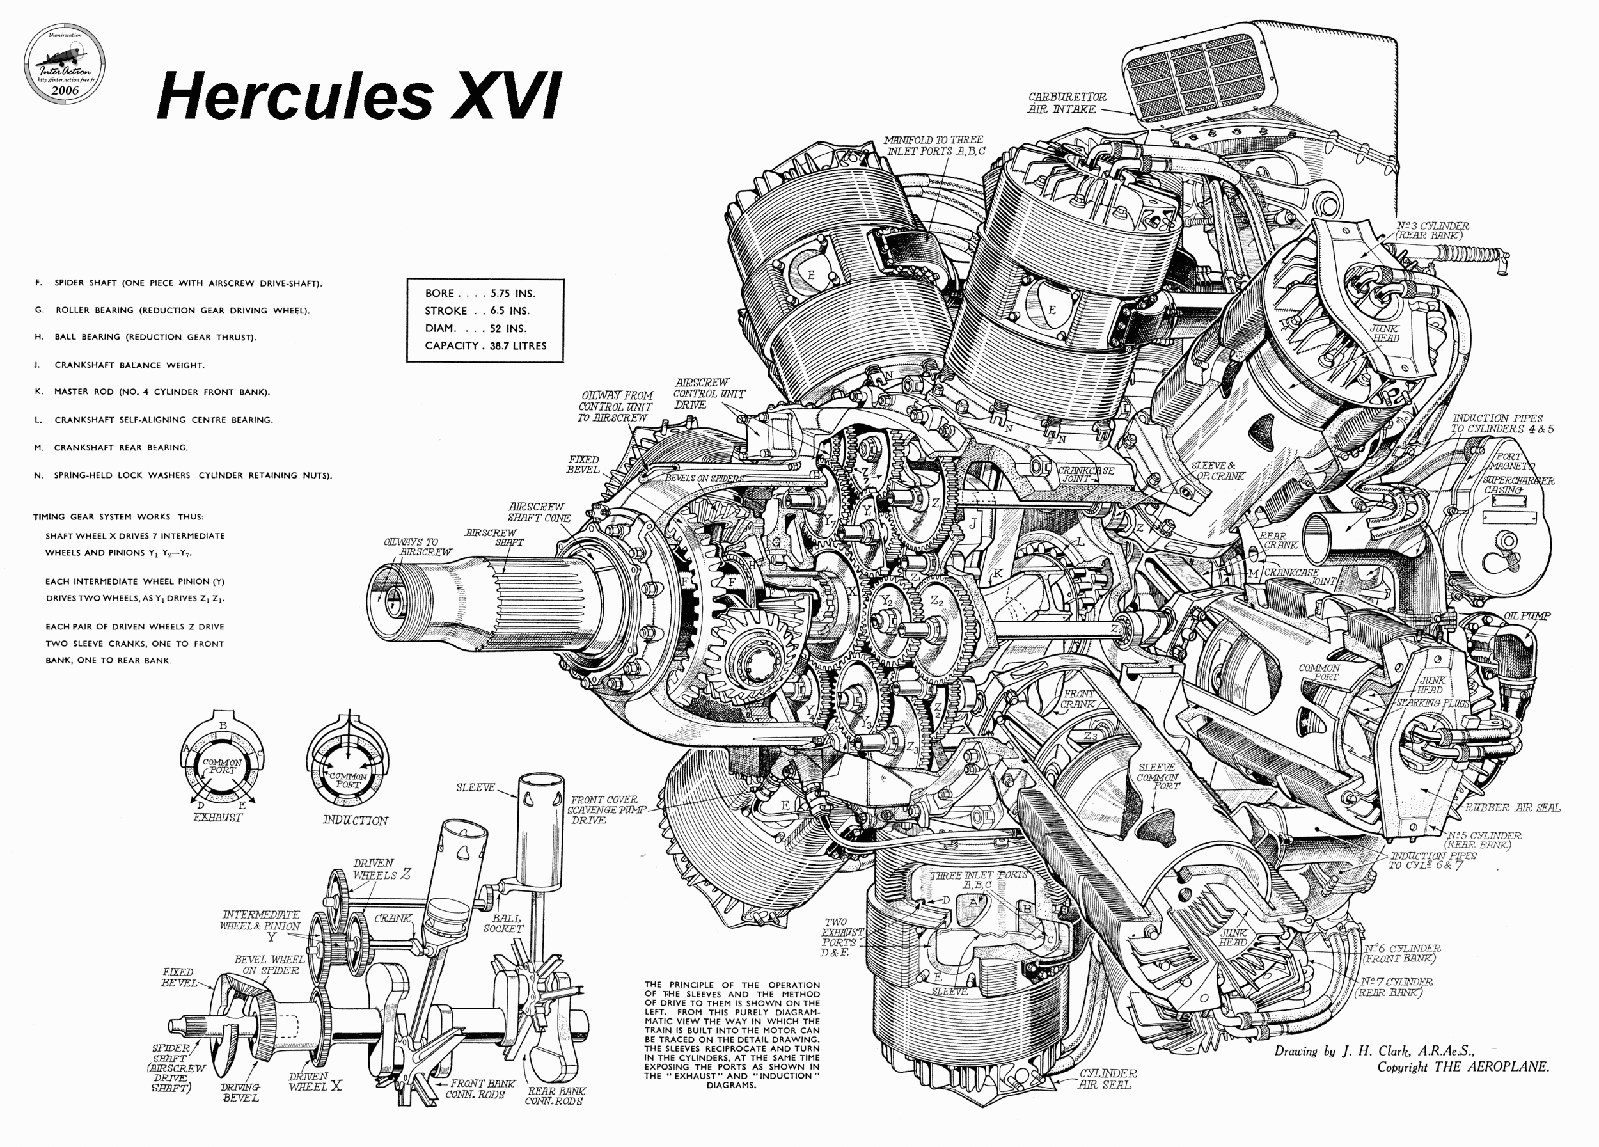 Hercules XVI engine cutaway. Esquemas. Radial engine, Aircraft